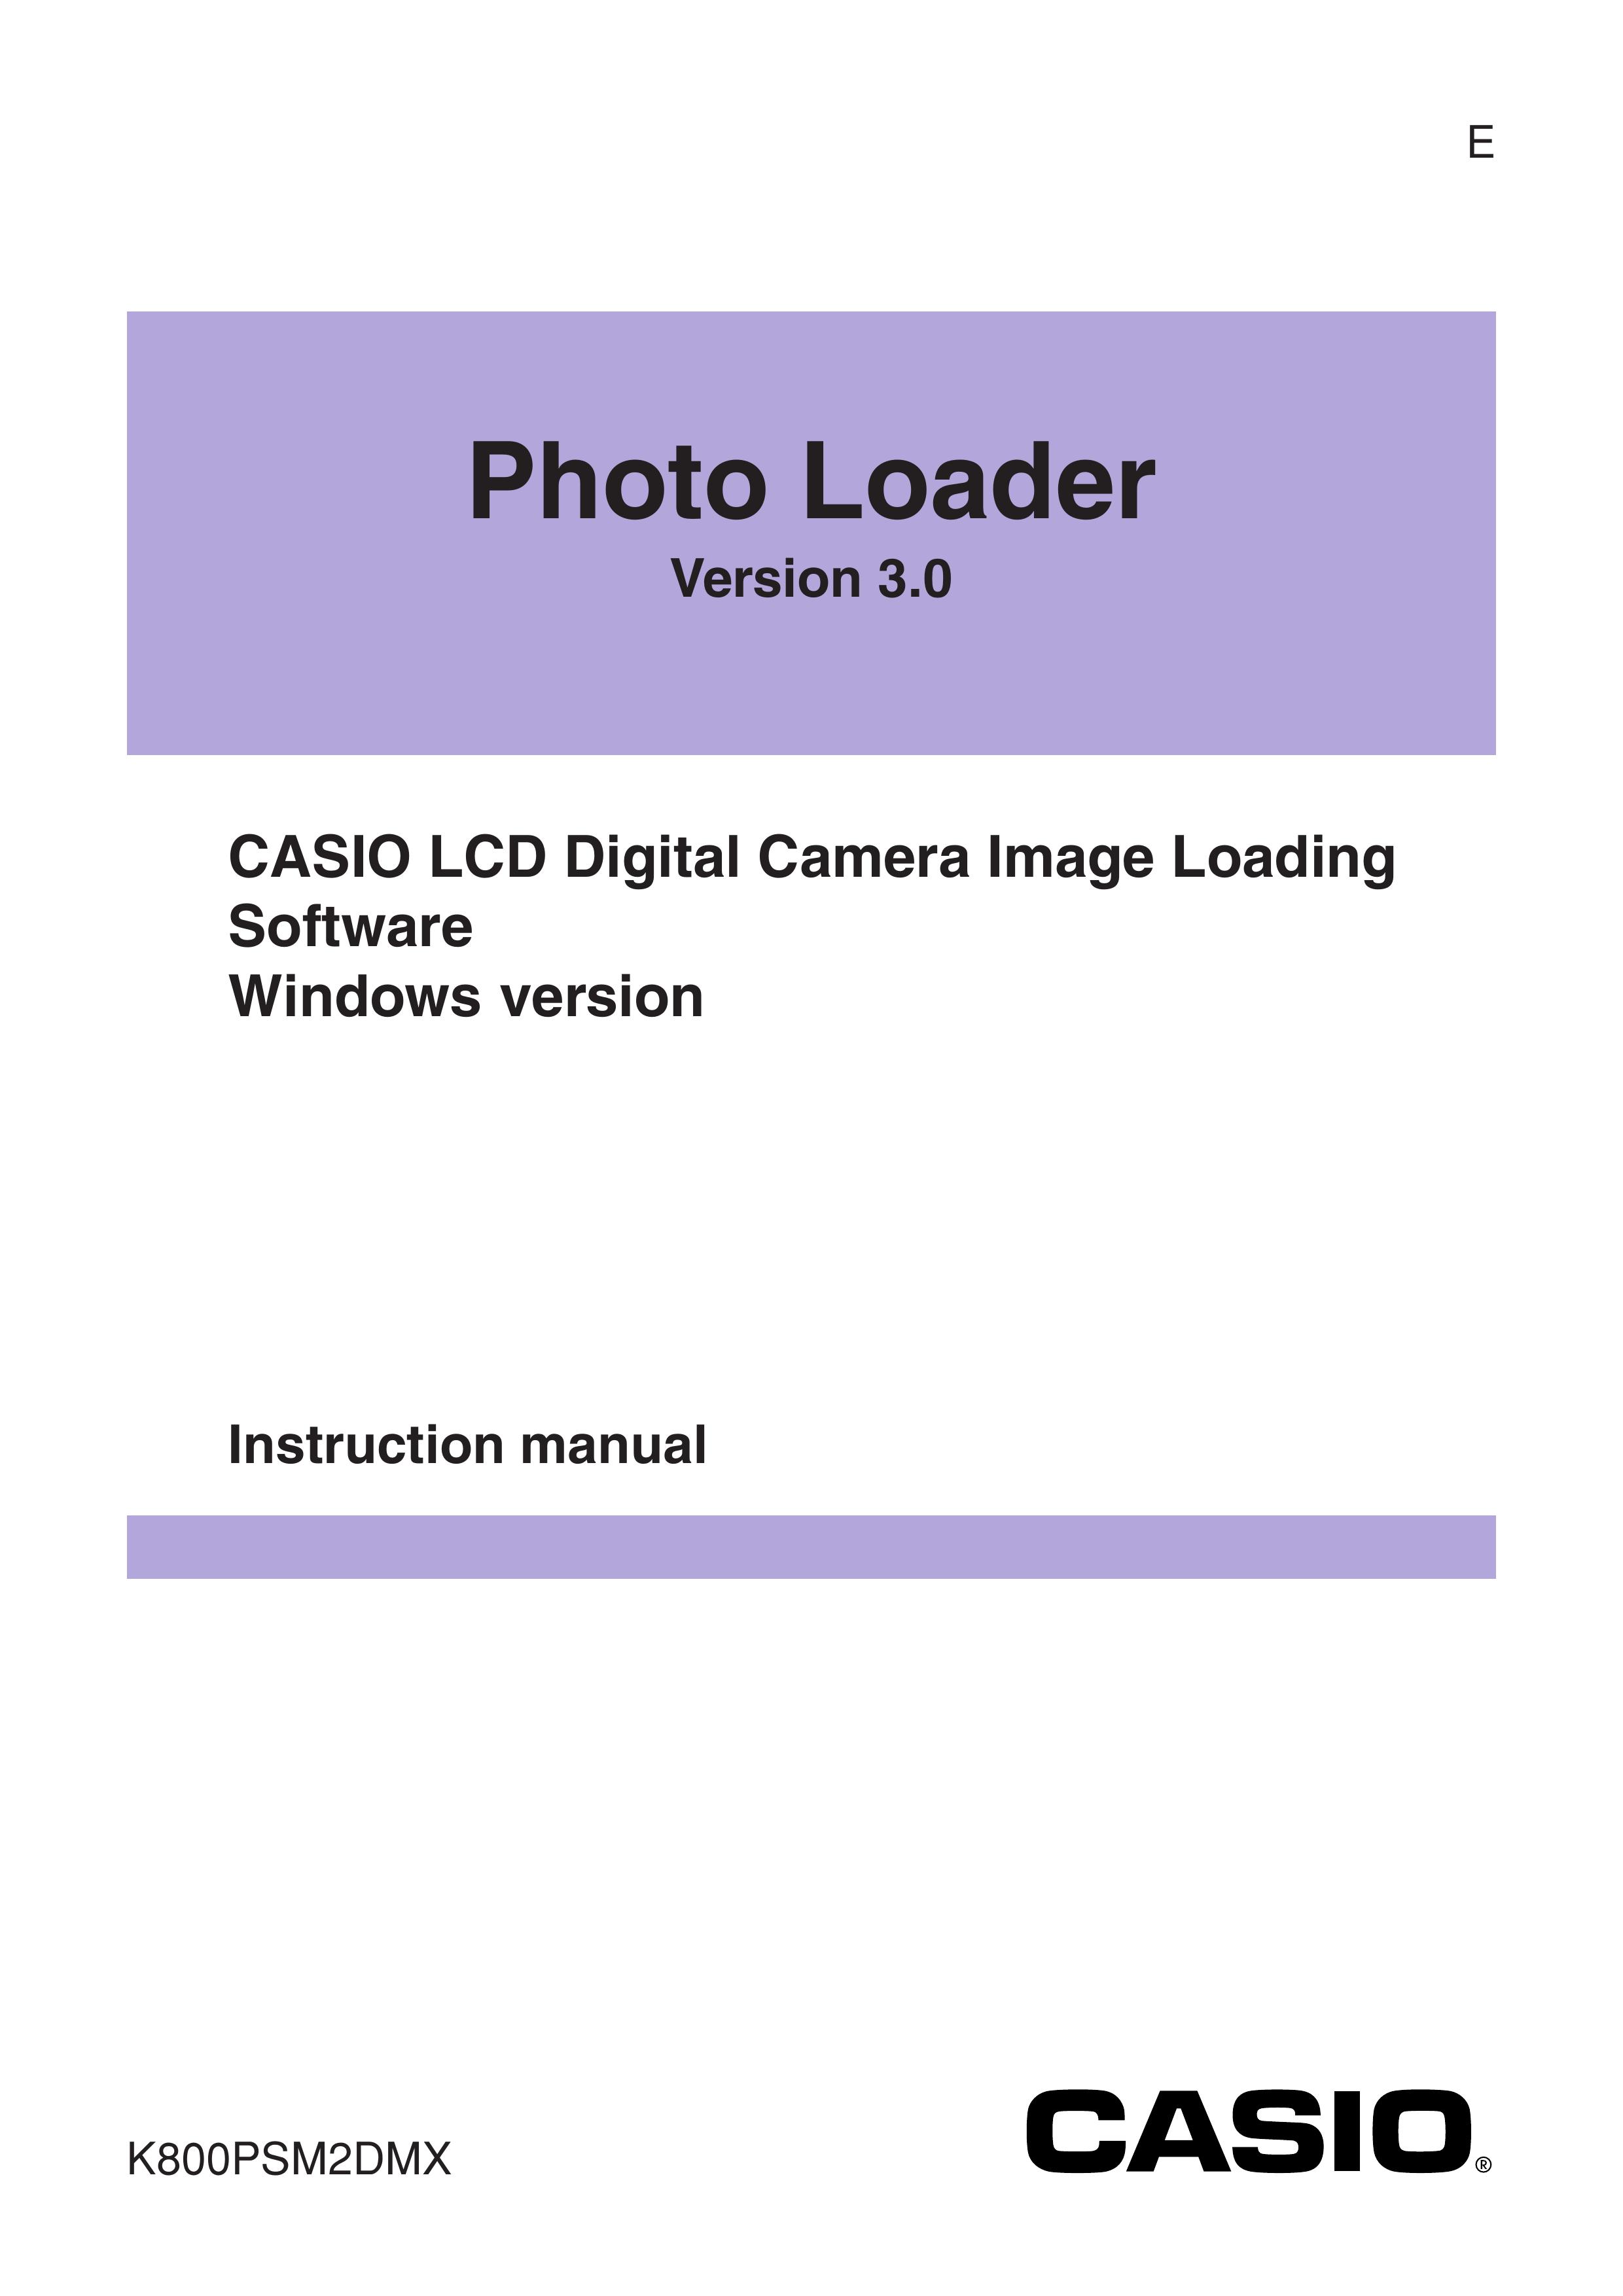 Casio K800PSM2DMX Camera Accessories User Manual